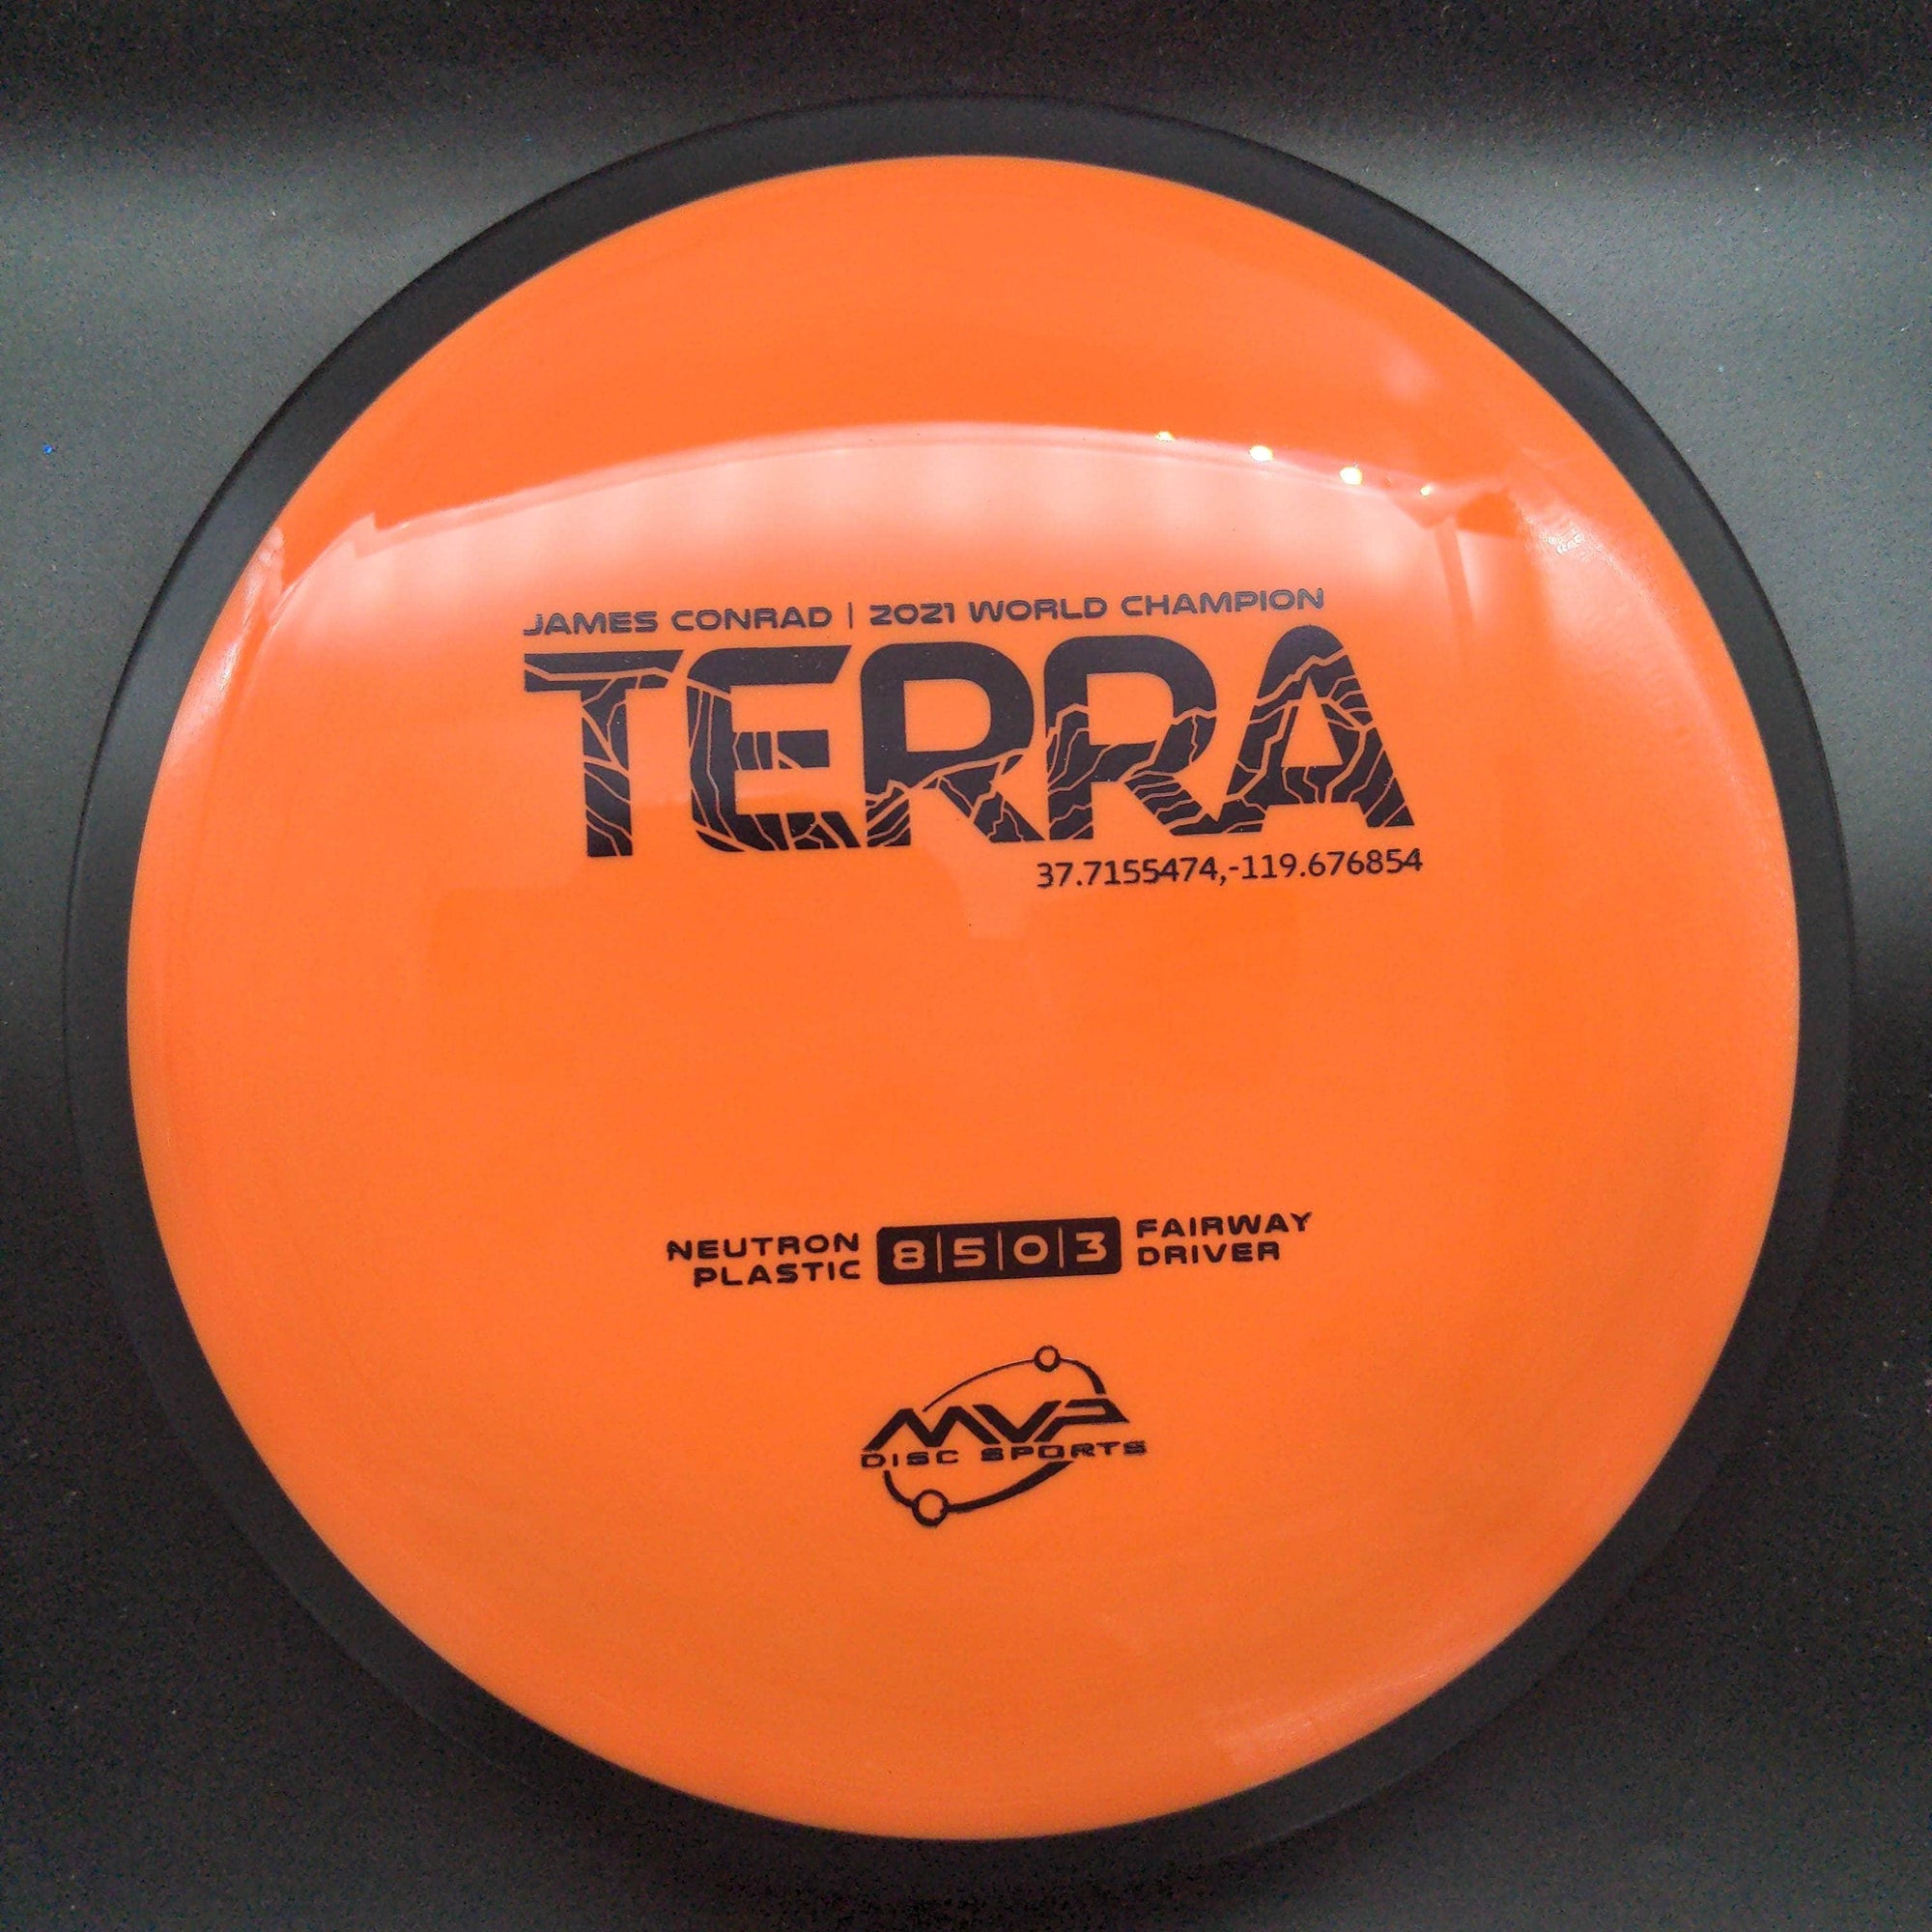 MVP Fairway Driver Light Yellow 173g Terra, Neutron Plastic, James Conrad World Champion Edition